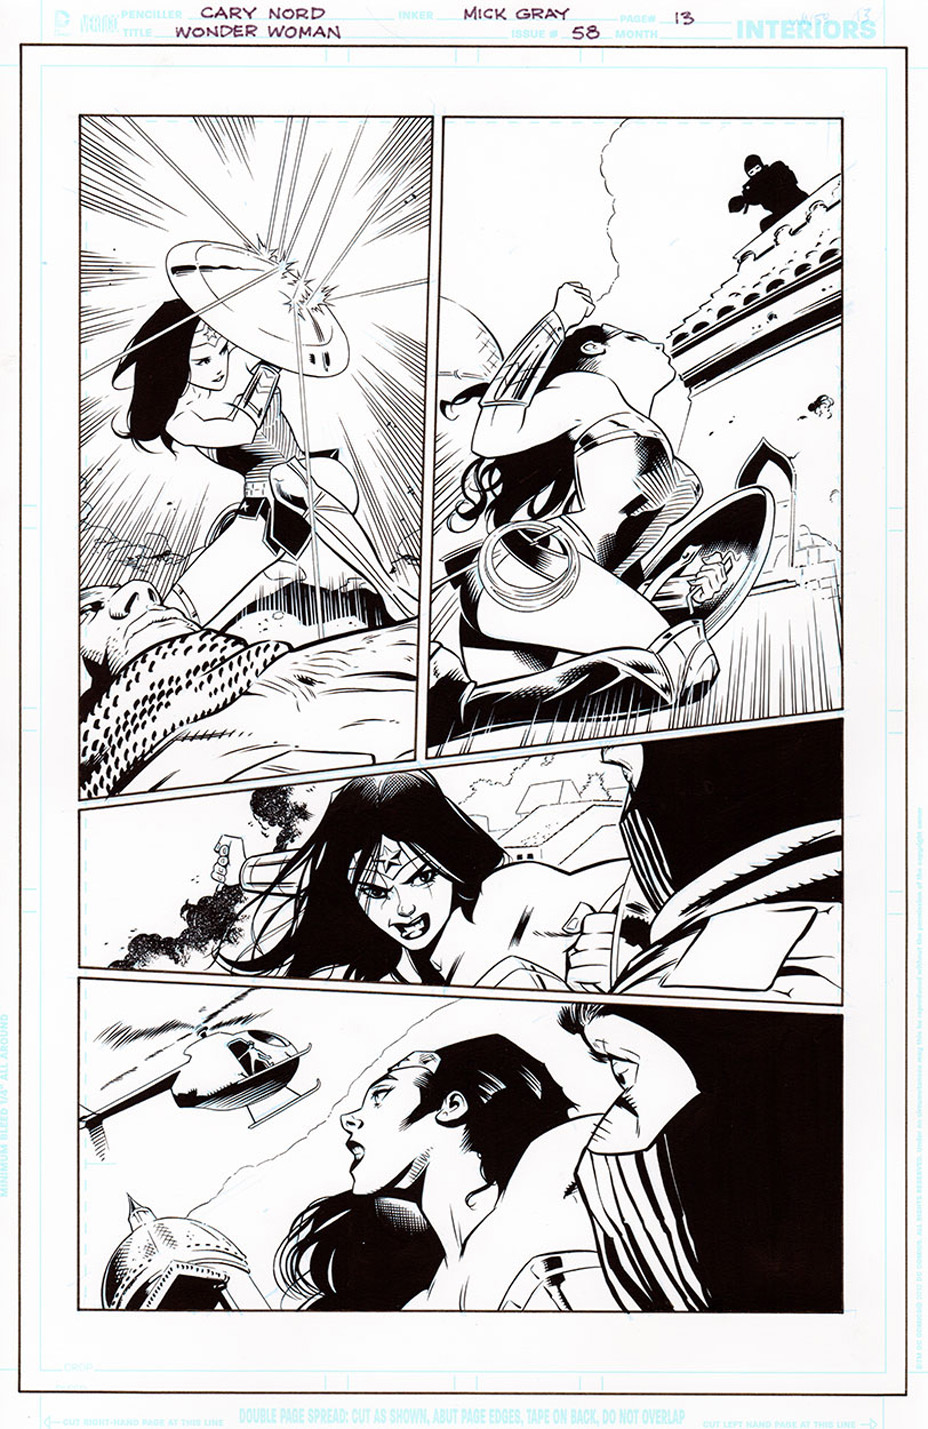 Wonder Woman #58, par G. Willow Wilson, Cary Nord et Mick Gray